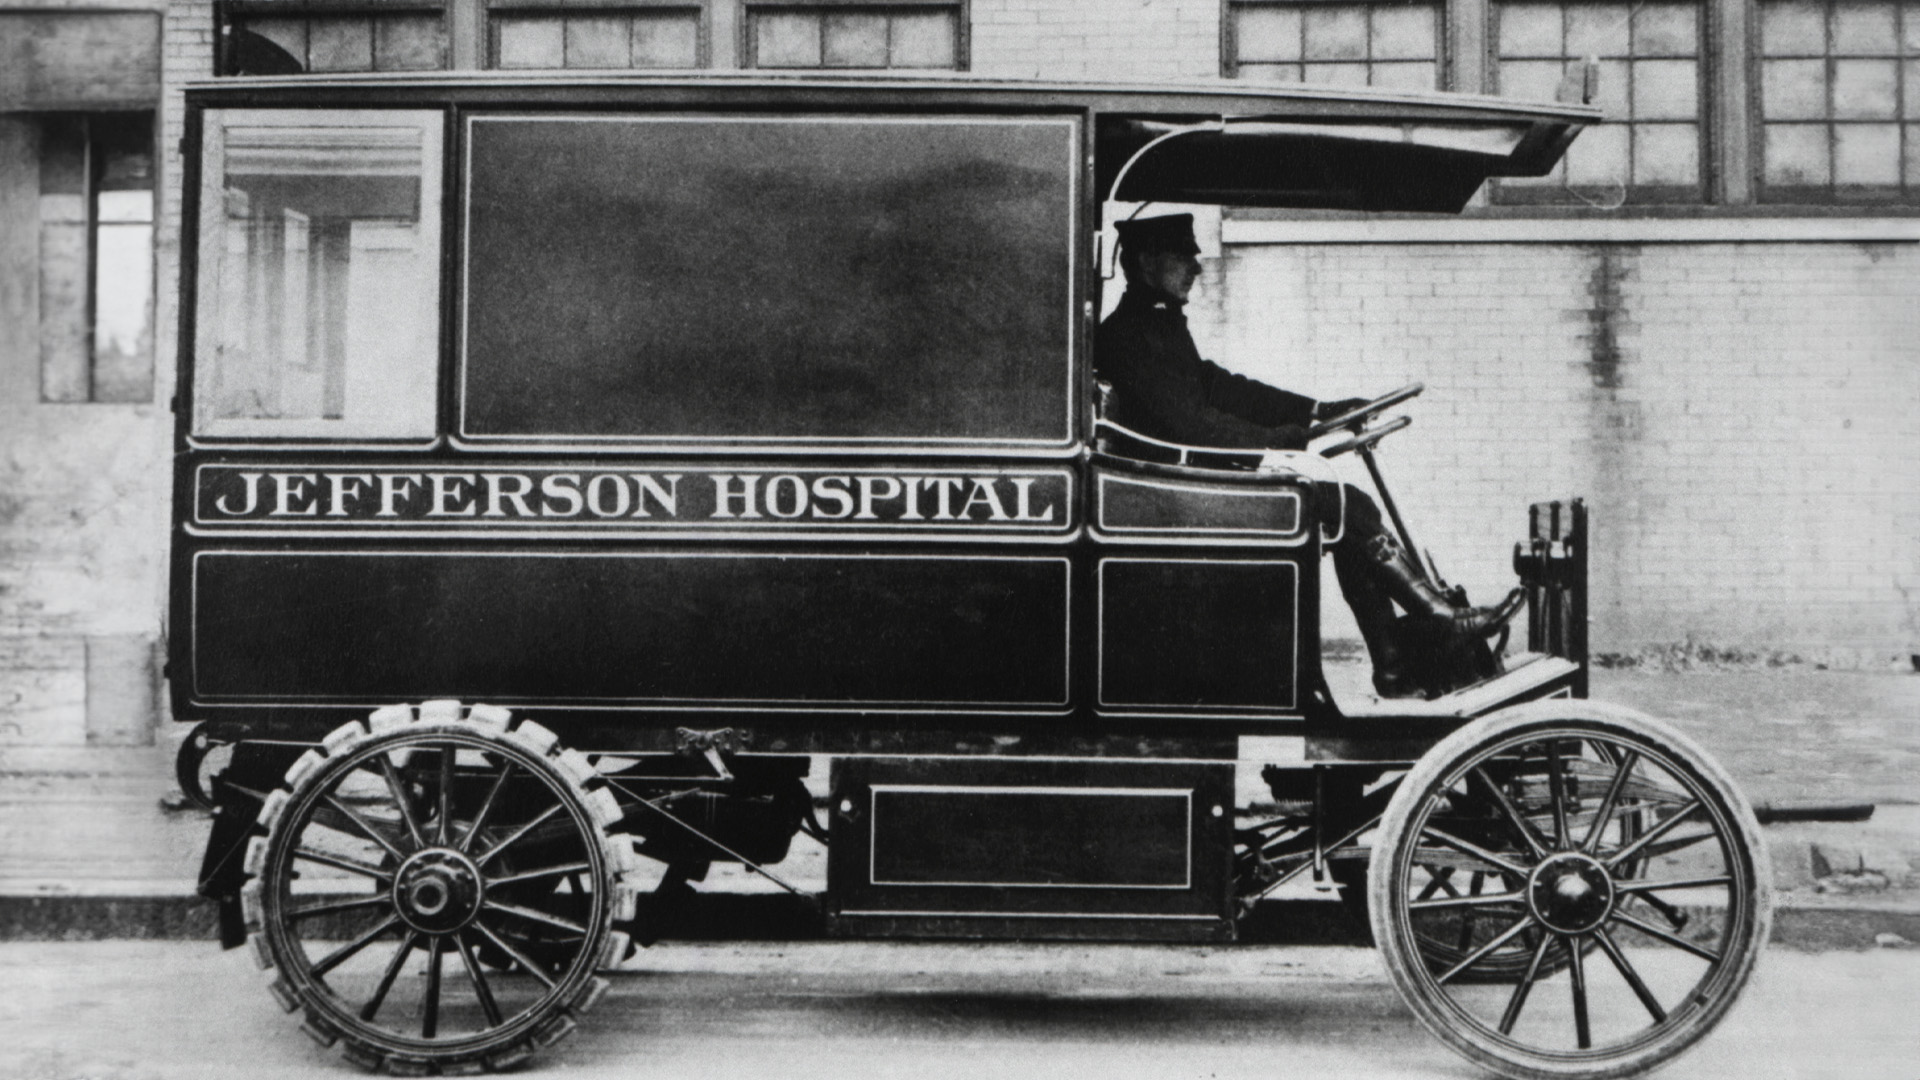 Historical image of the mobile Jefferson Hospital ambulance.